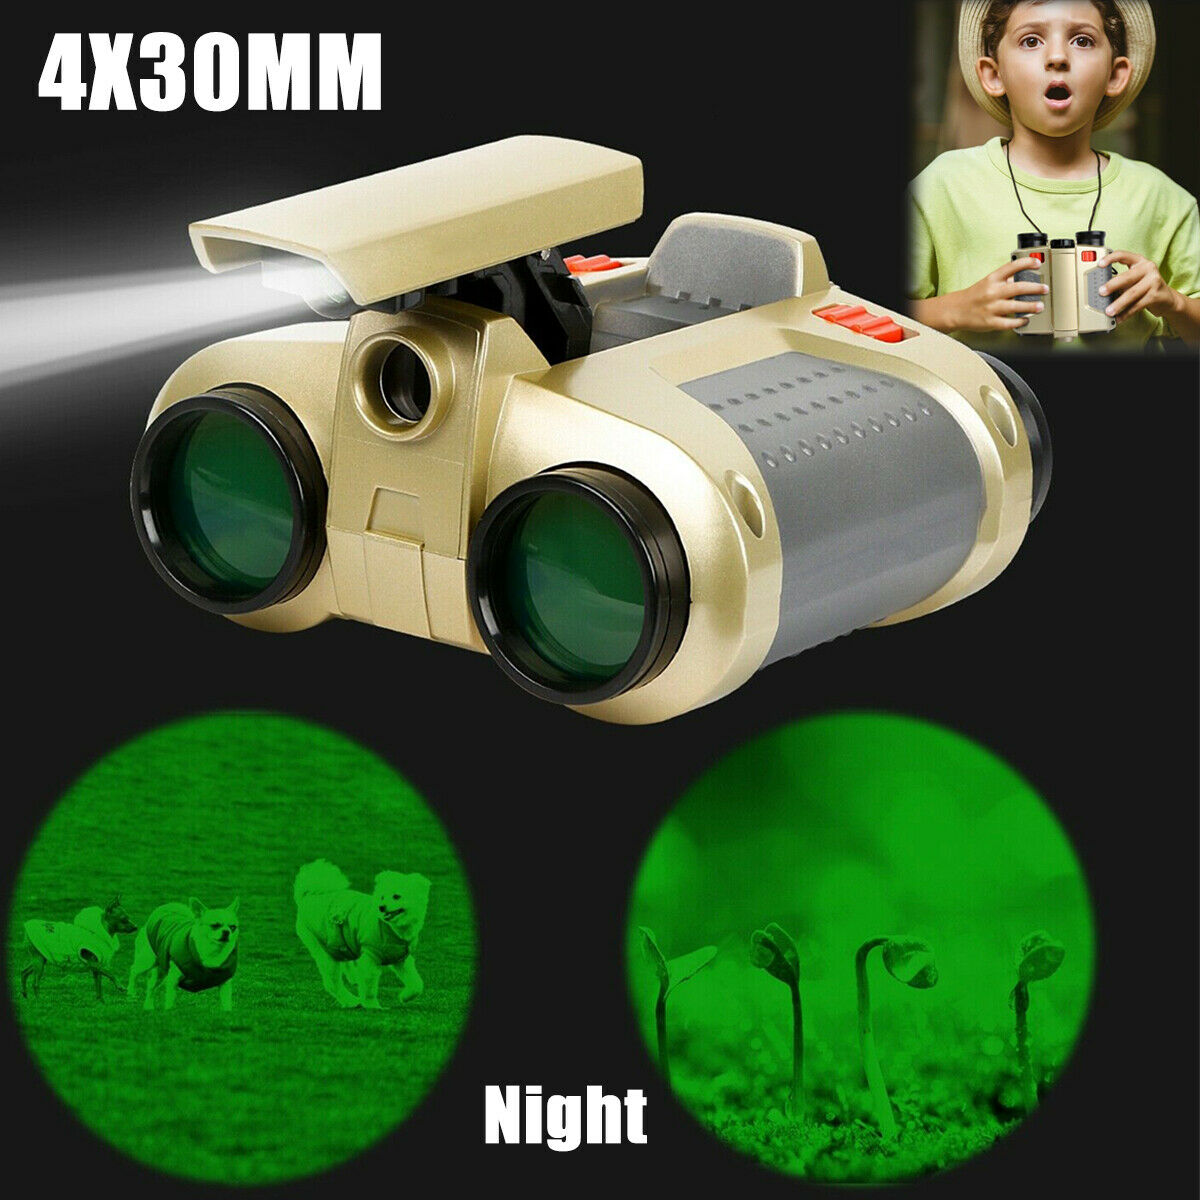 Night Vision Surveillance Scope Binoculars Telescope Pop-up Light Kids Toy Gift